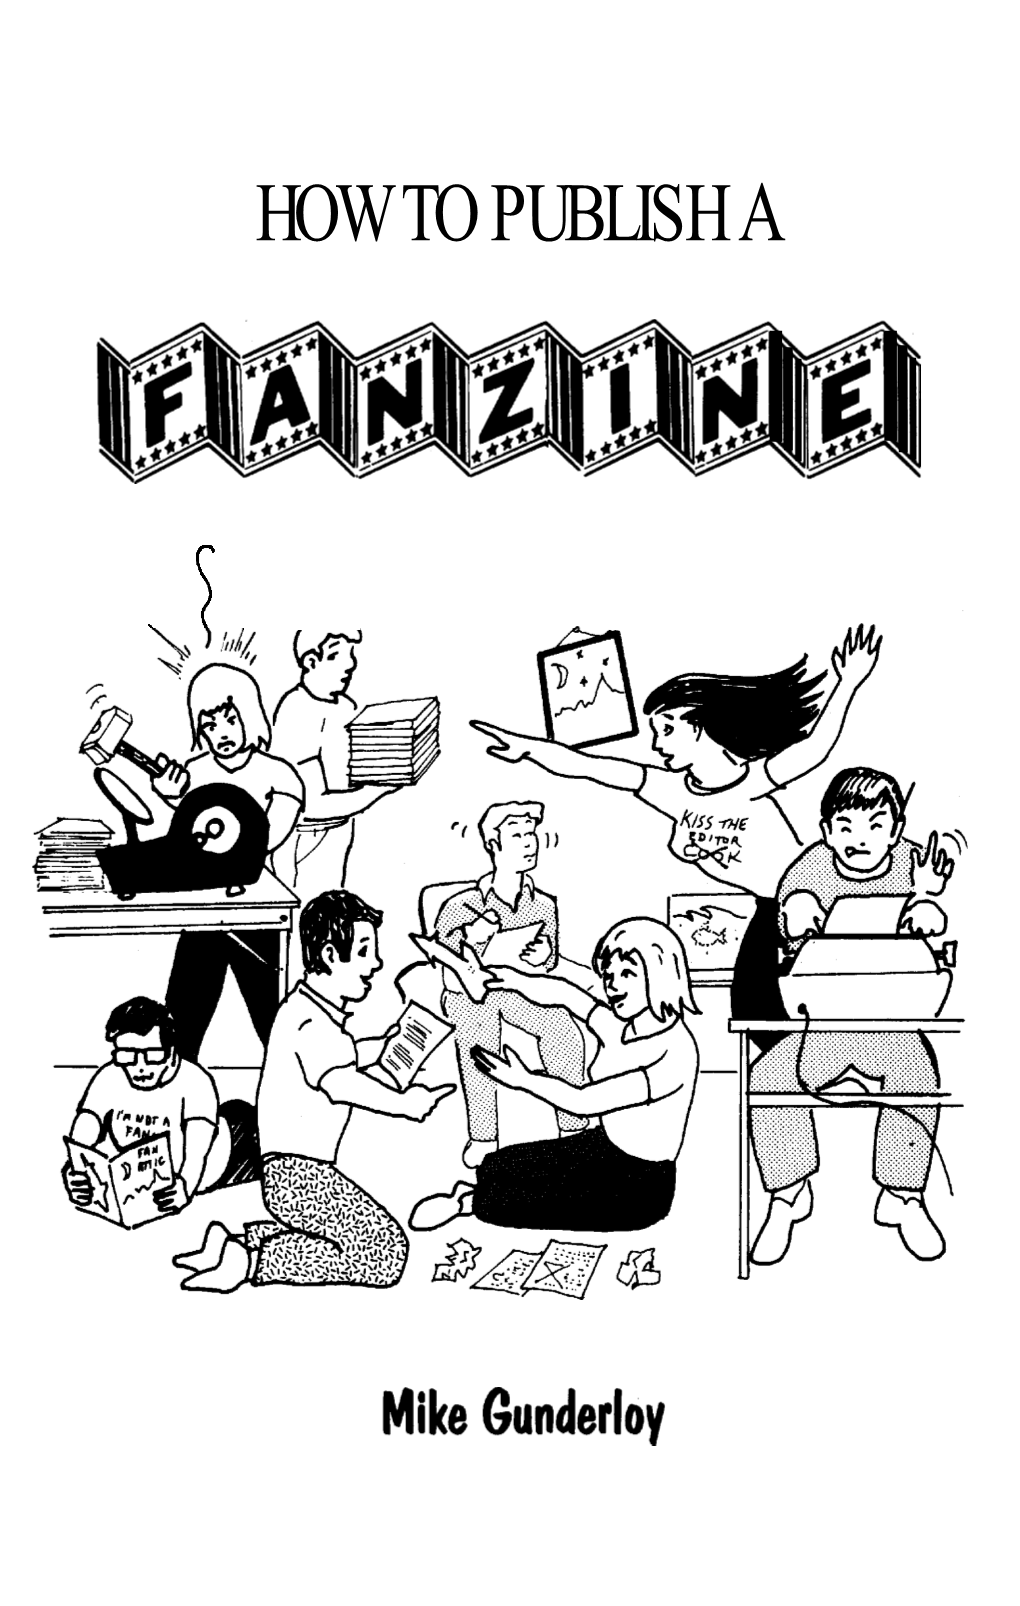 How to Publish a Fanzine (Loompanics, 1988)